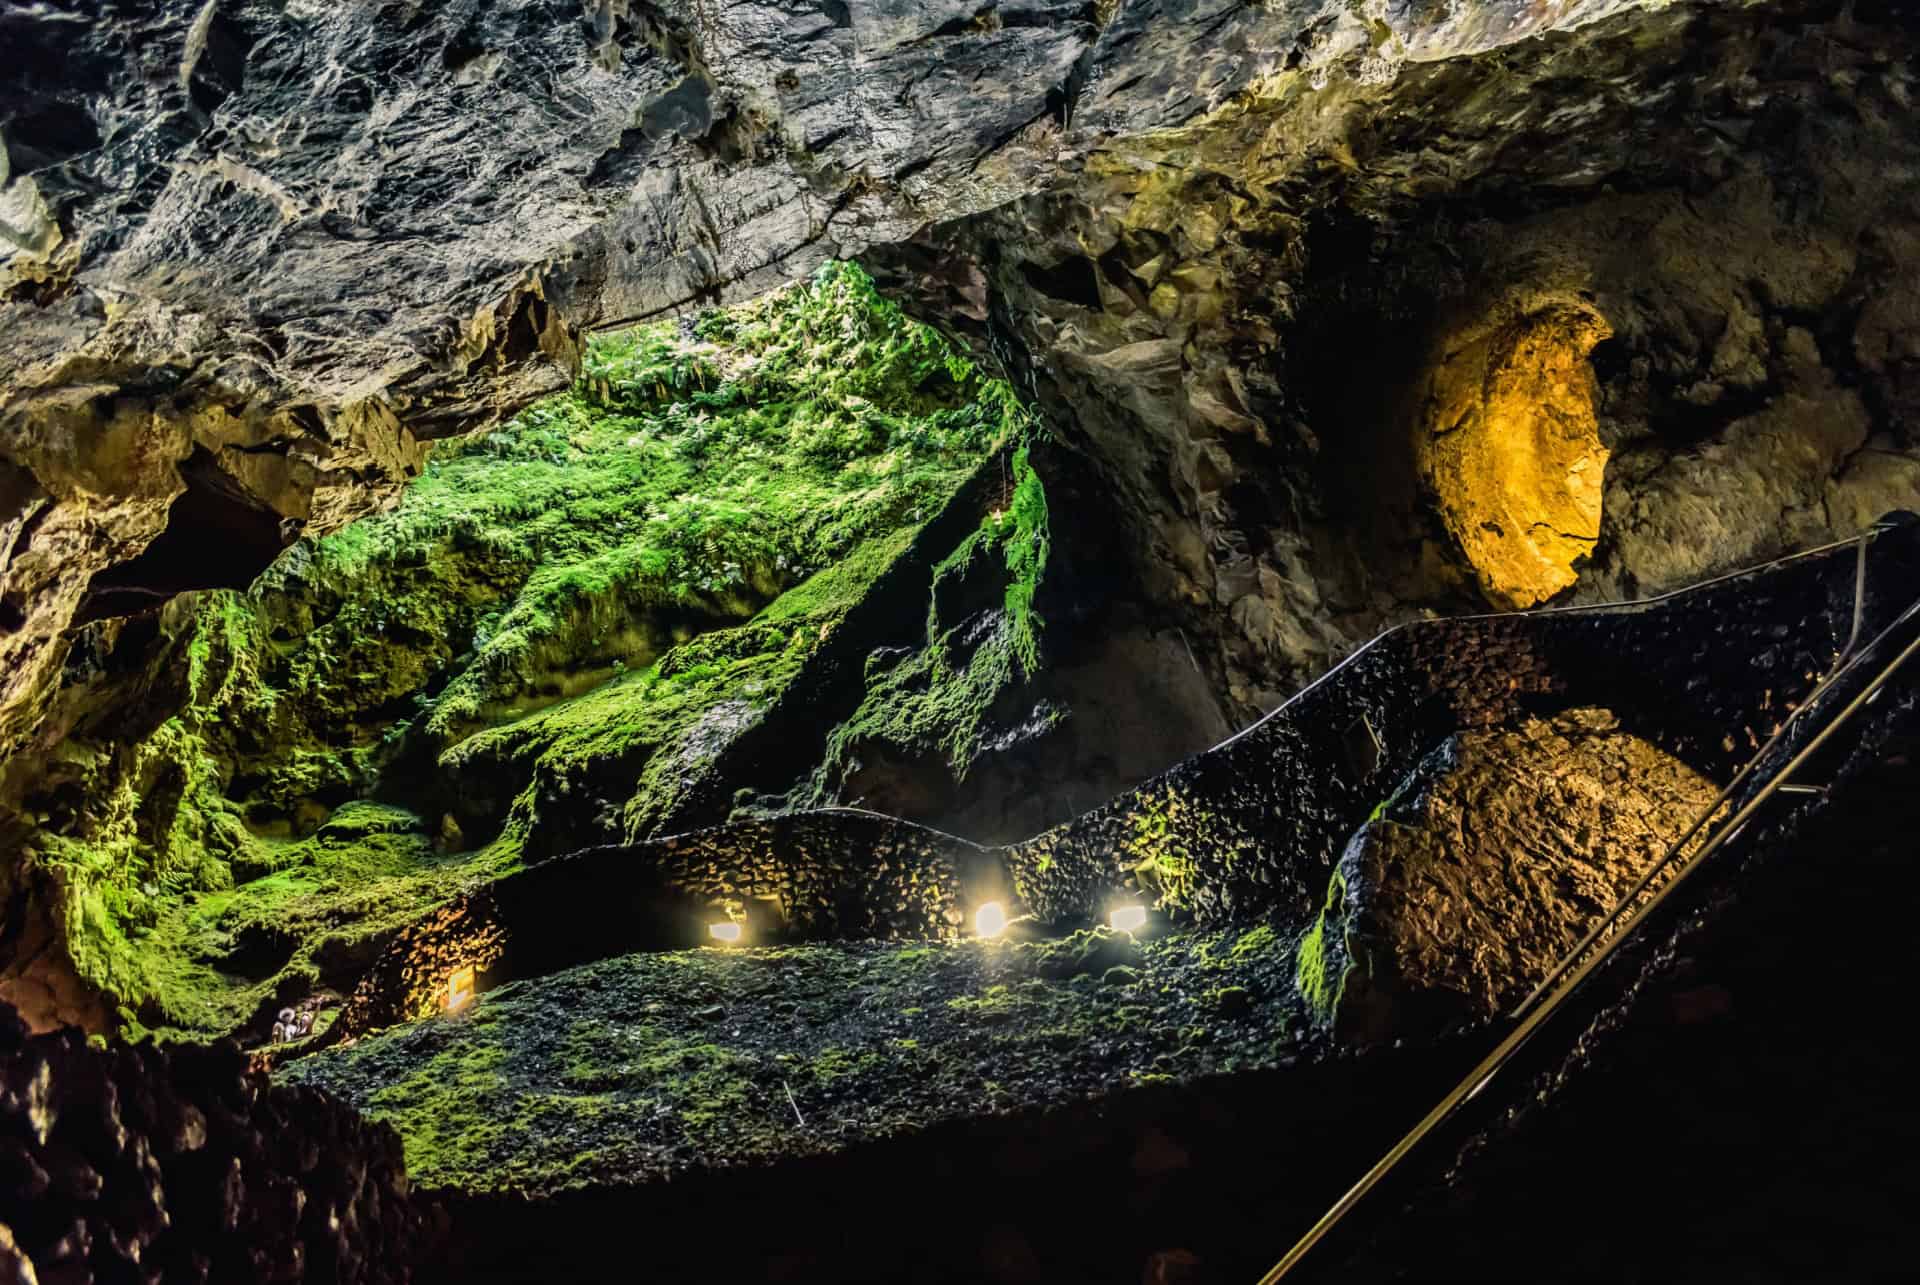 grottes algar do carvao